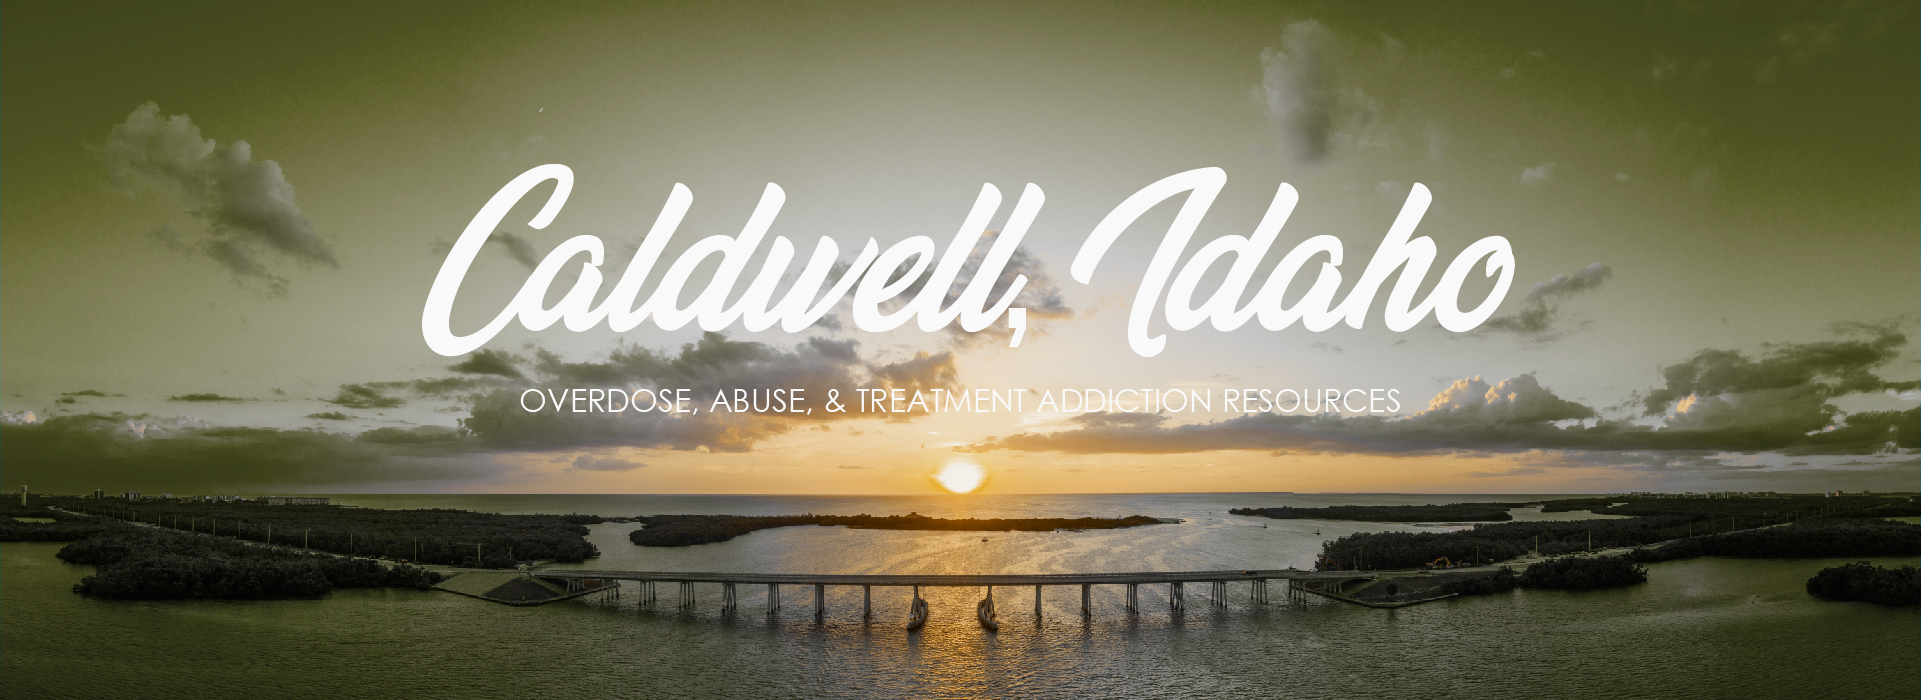 Caldwell, Idaho. Overdose, abuse and treatment addiction resources